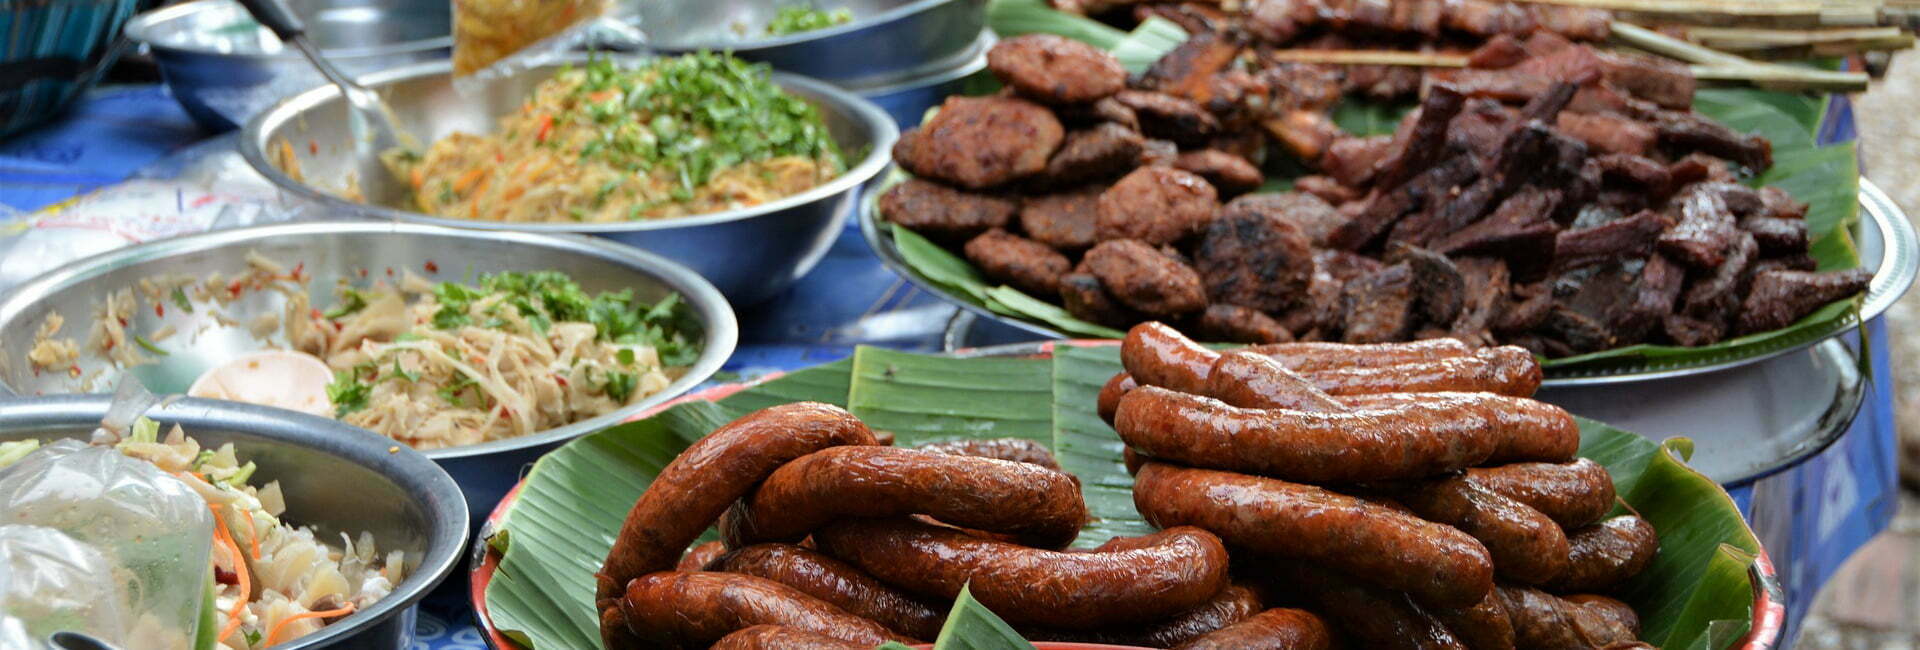 Laotian cuisine is also famous for pork sausages